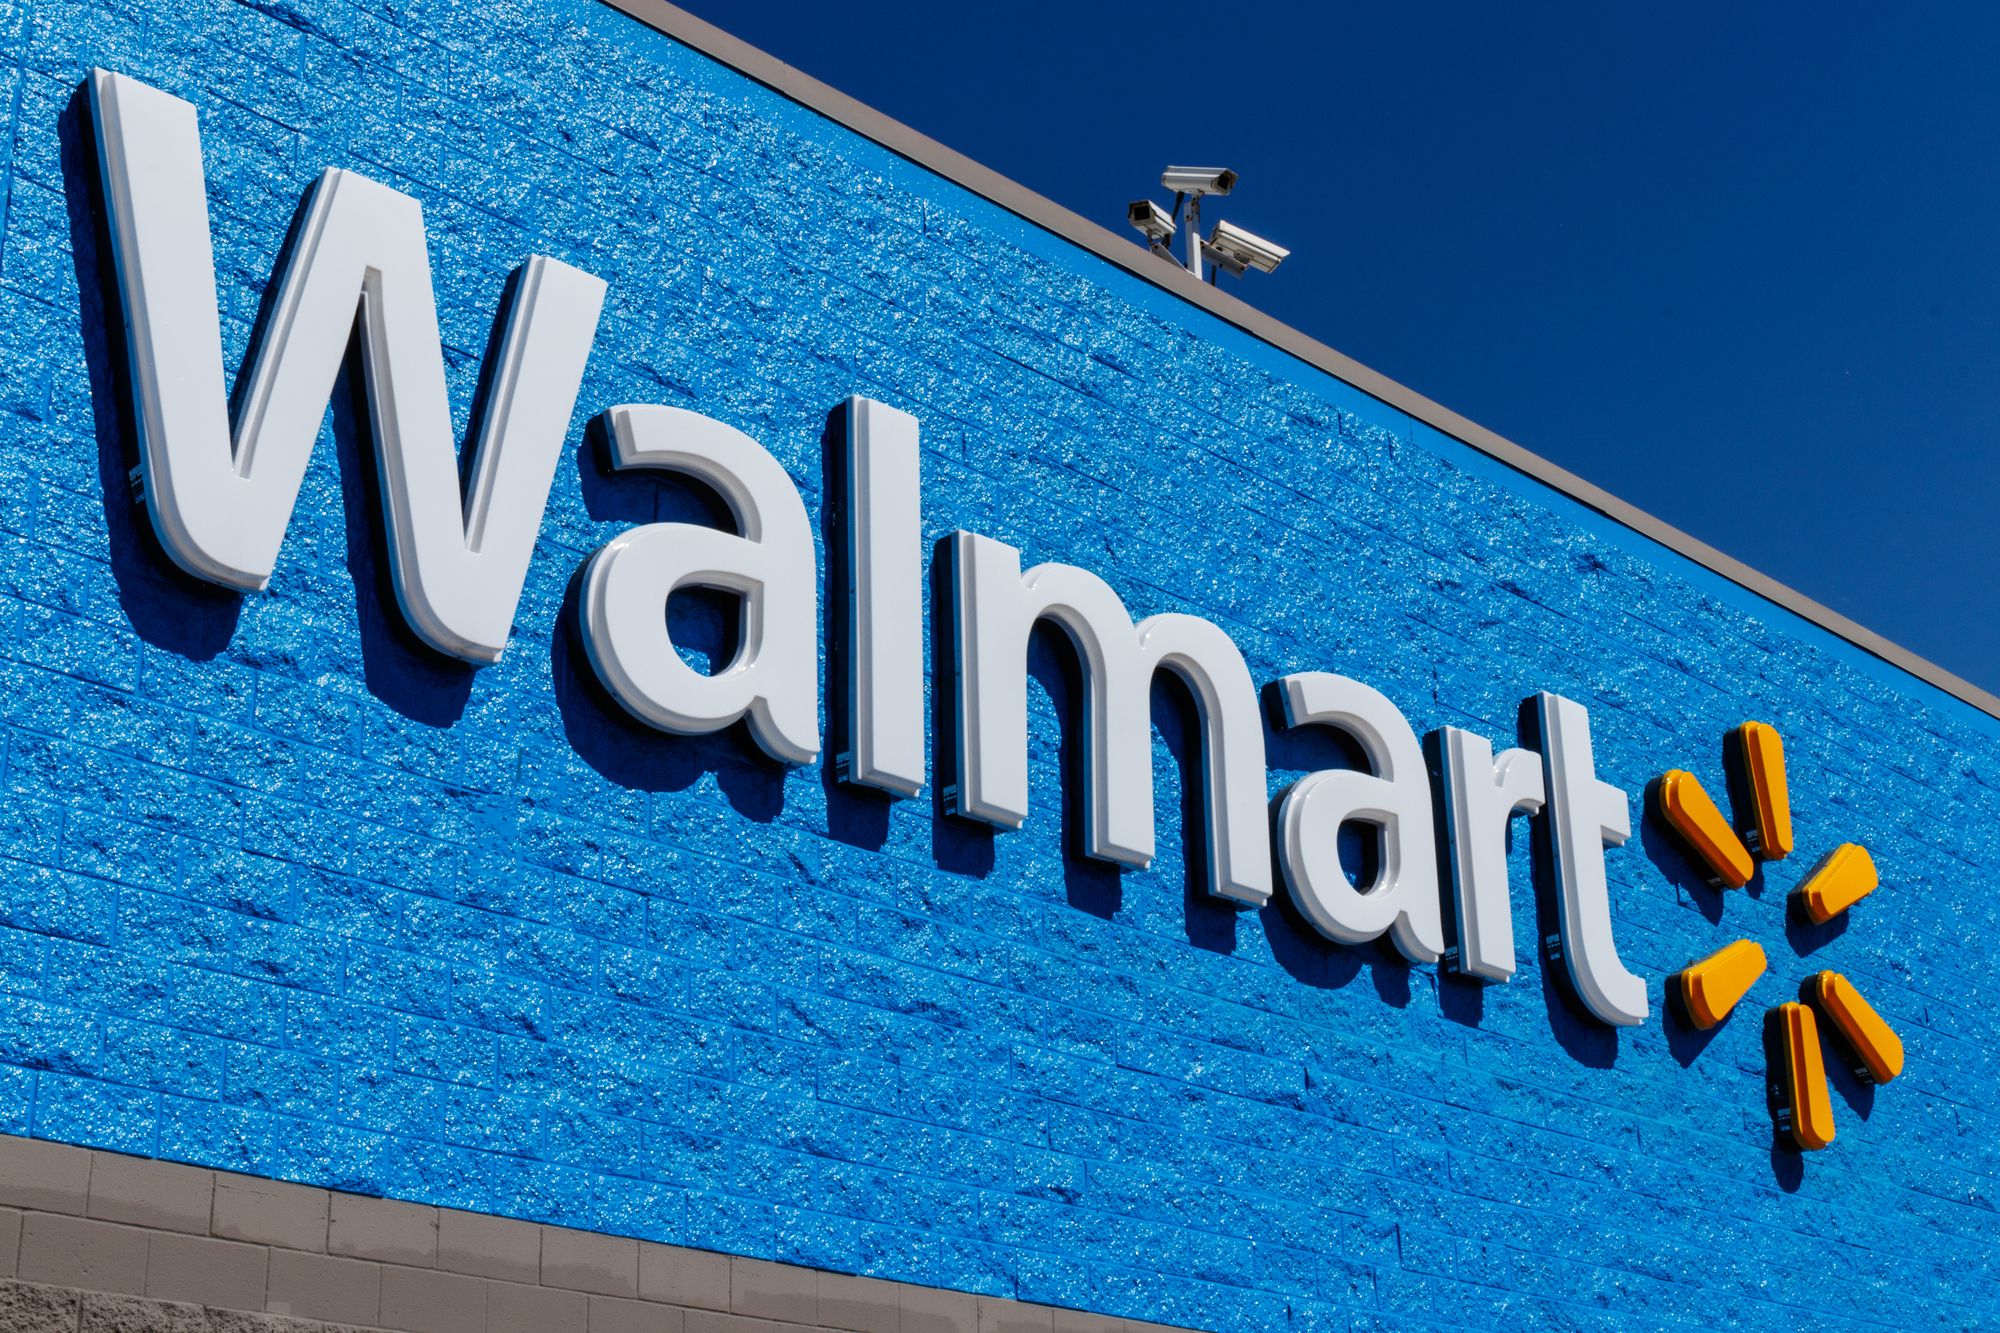 Walmart markets and sells Onn power banks